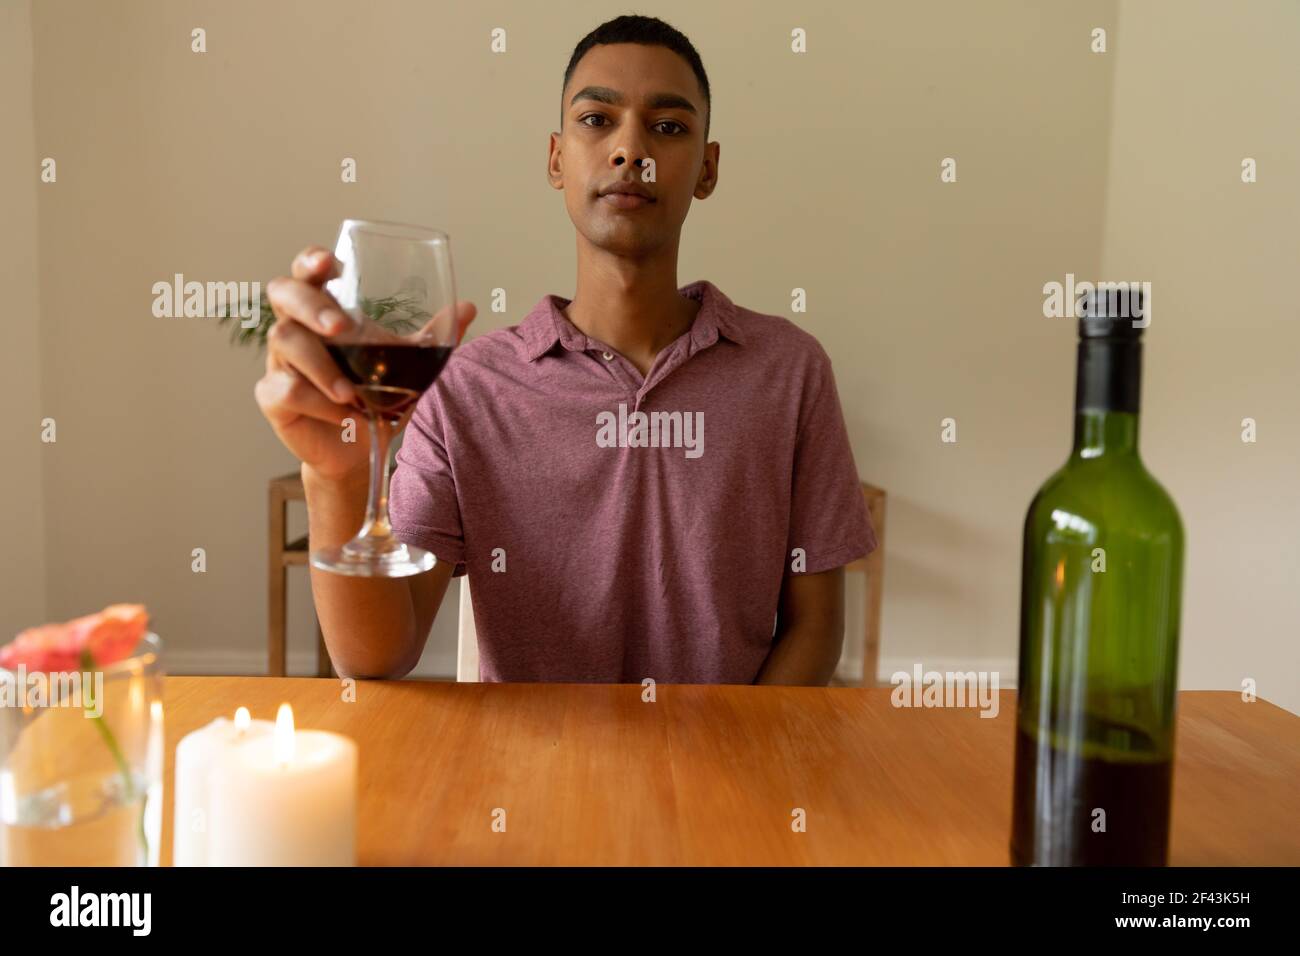 Man with wine glass Stock Photo by ©Tverdohlib.com 94262798